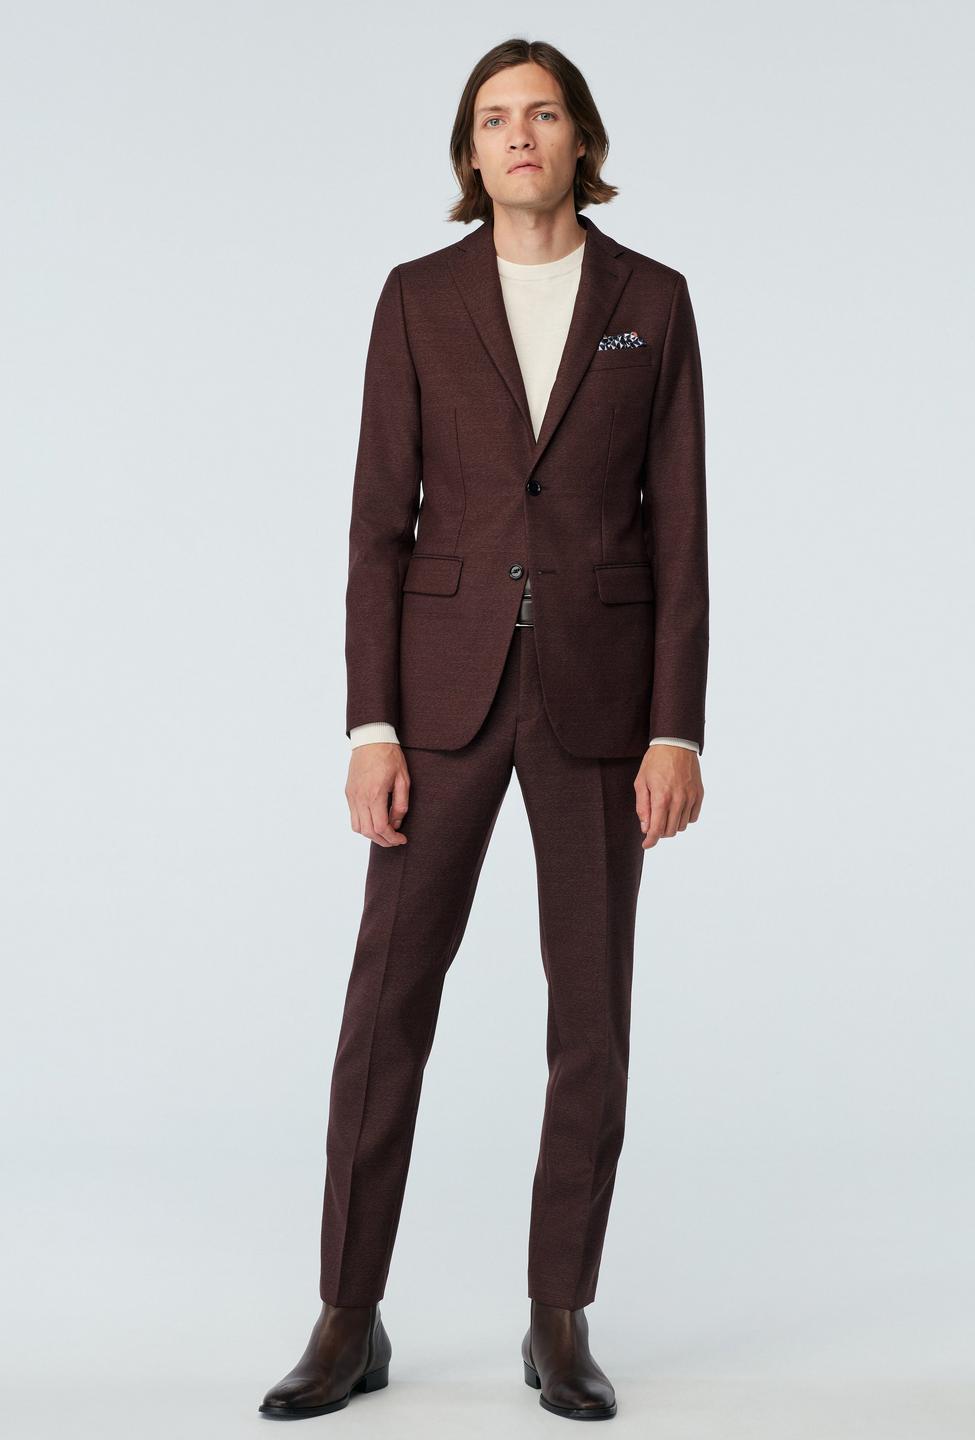 Burgundy Men Suit Notch Lapel Groom Tuxedo Formal Wedding Party Prom Suit  Custom | eBay